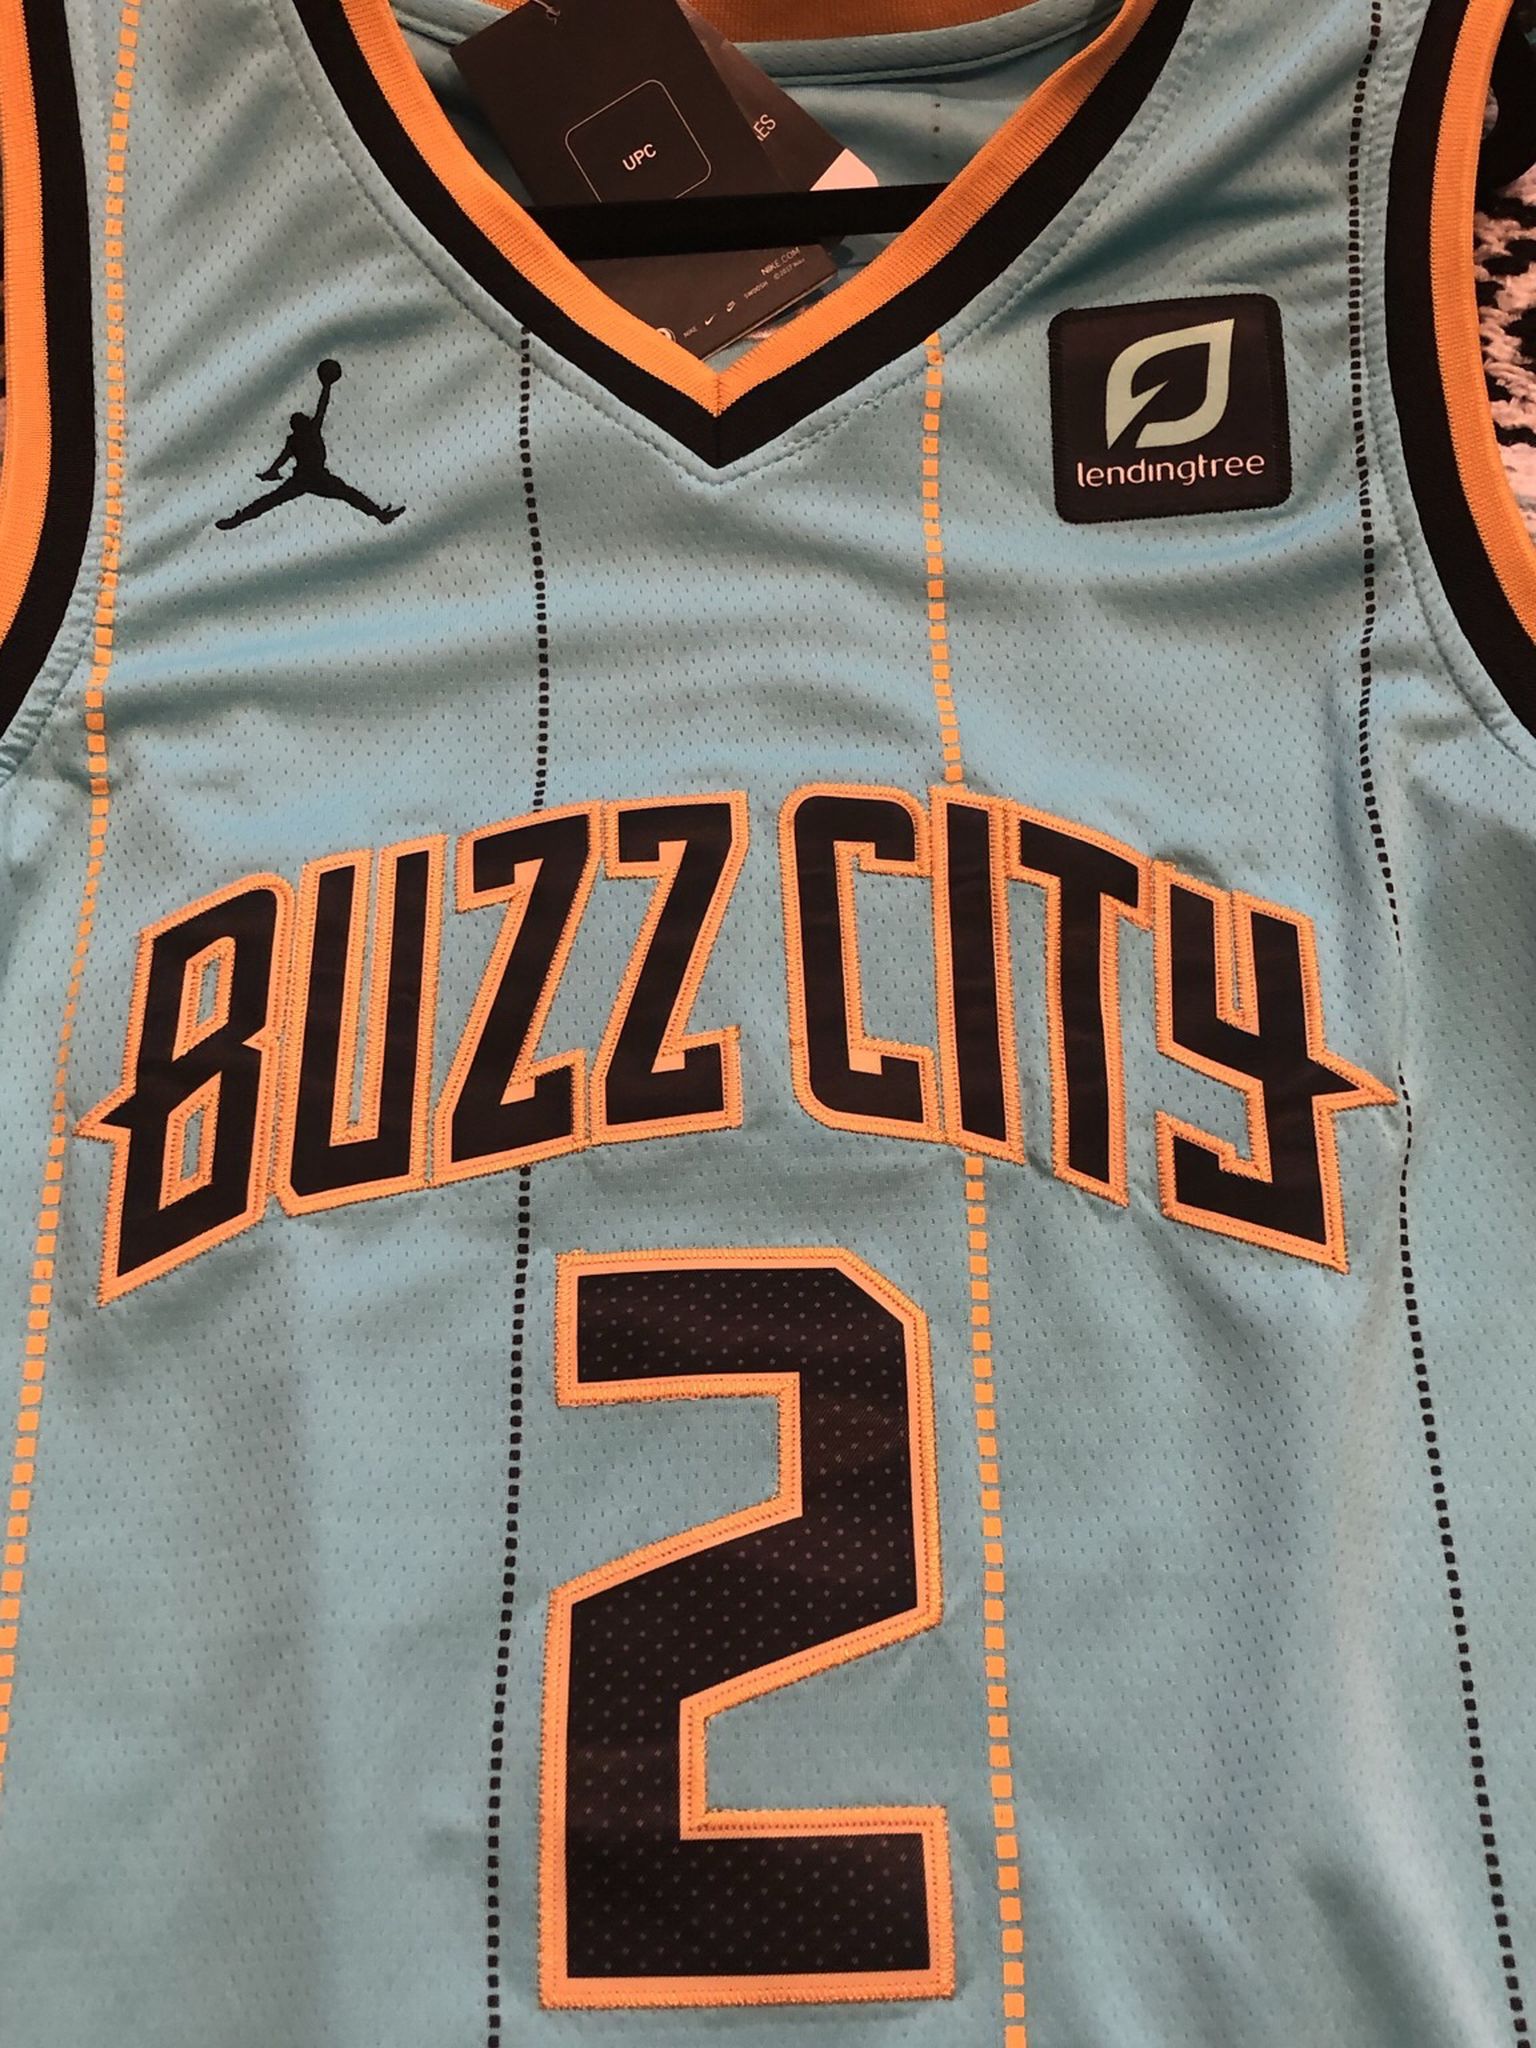 buzz city jersey lamelo